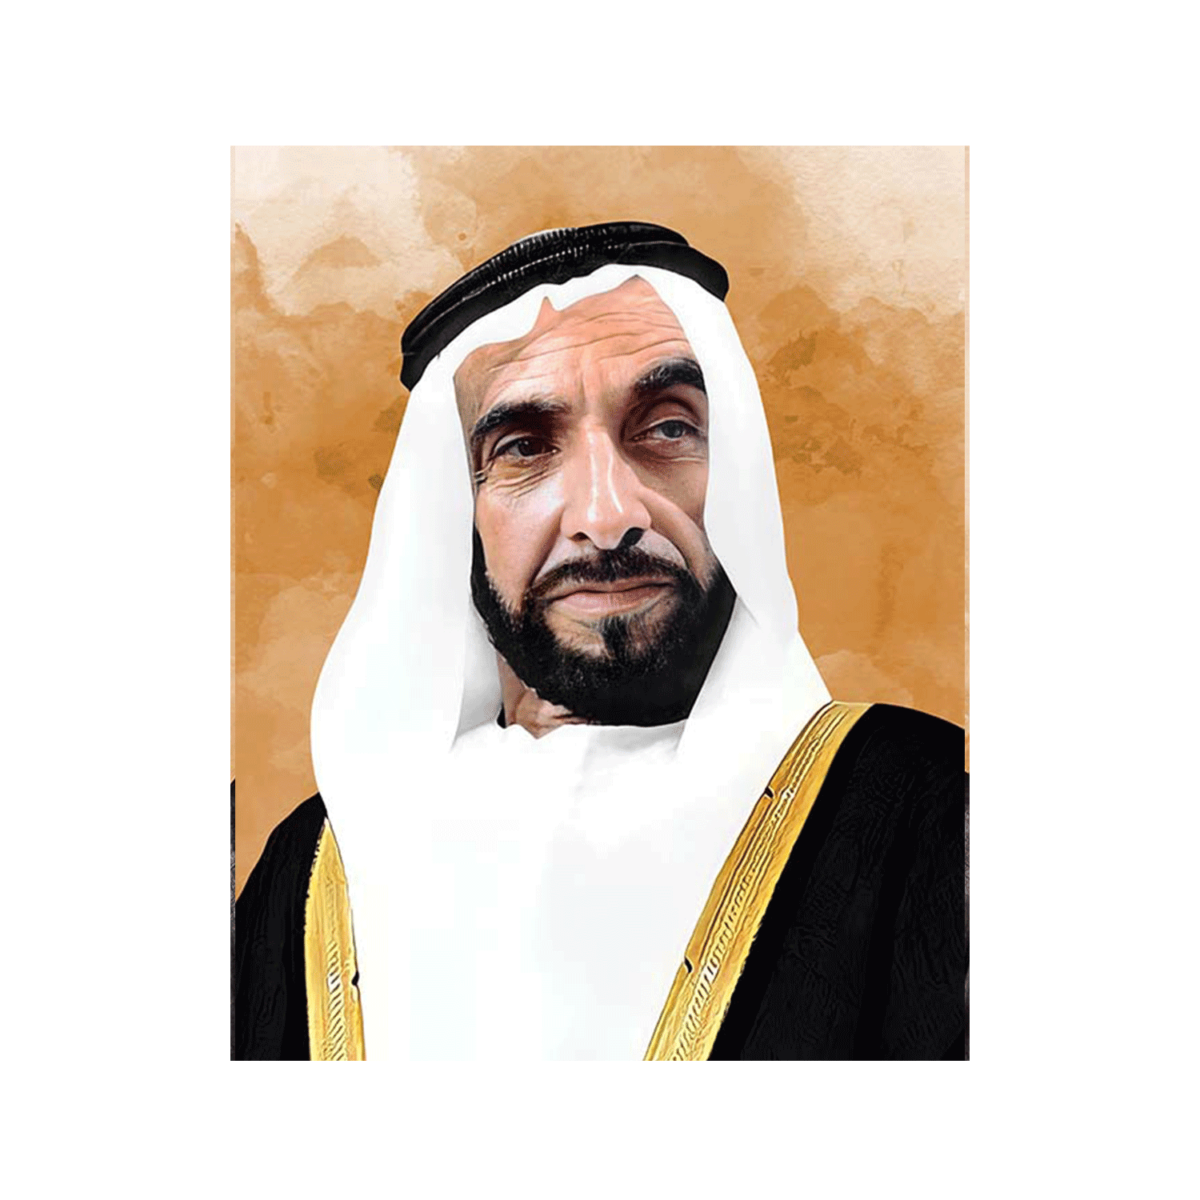 His Highness Sheikh Zayed bin Sultan Al Nahyan